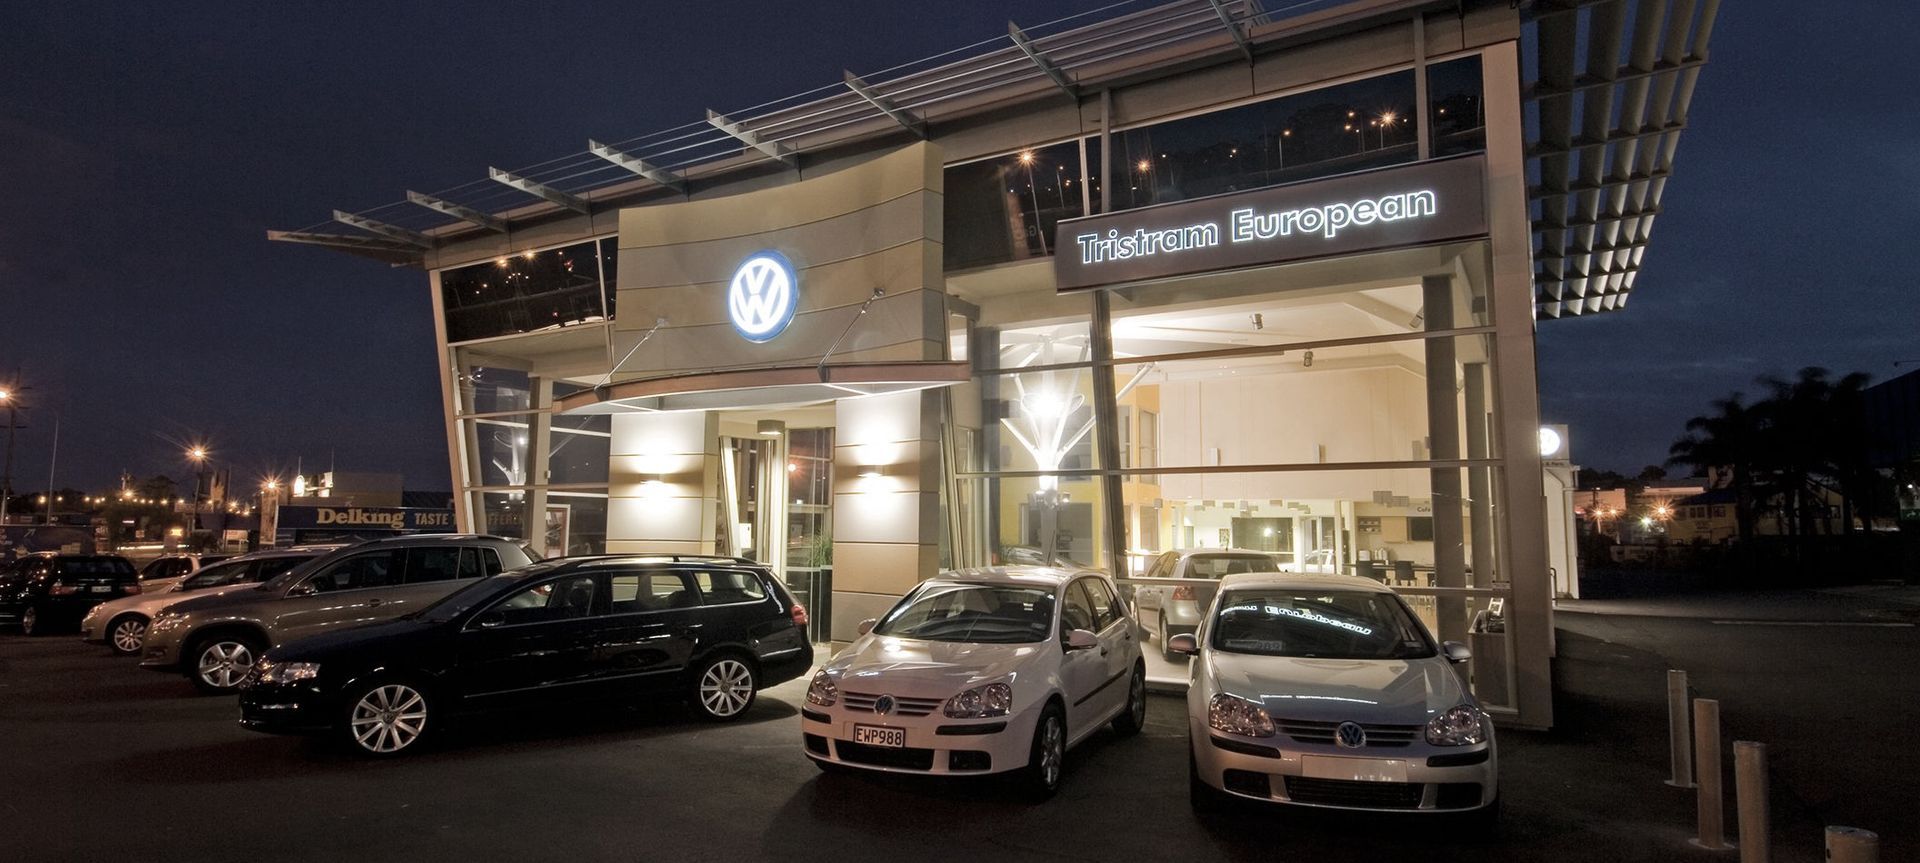 VW Showroom banner